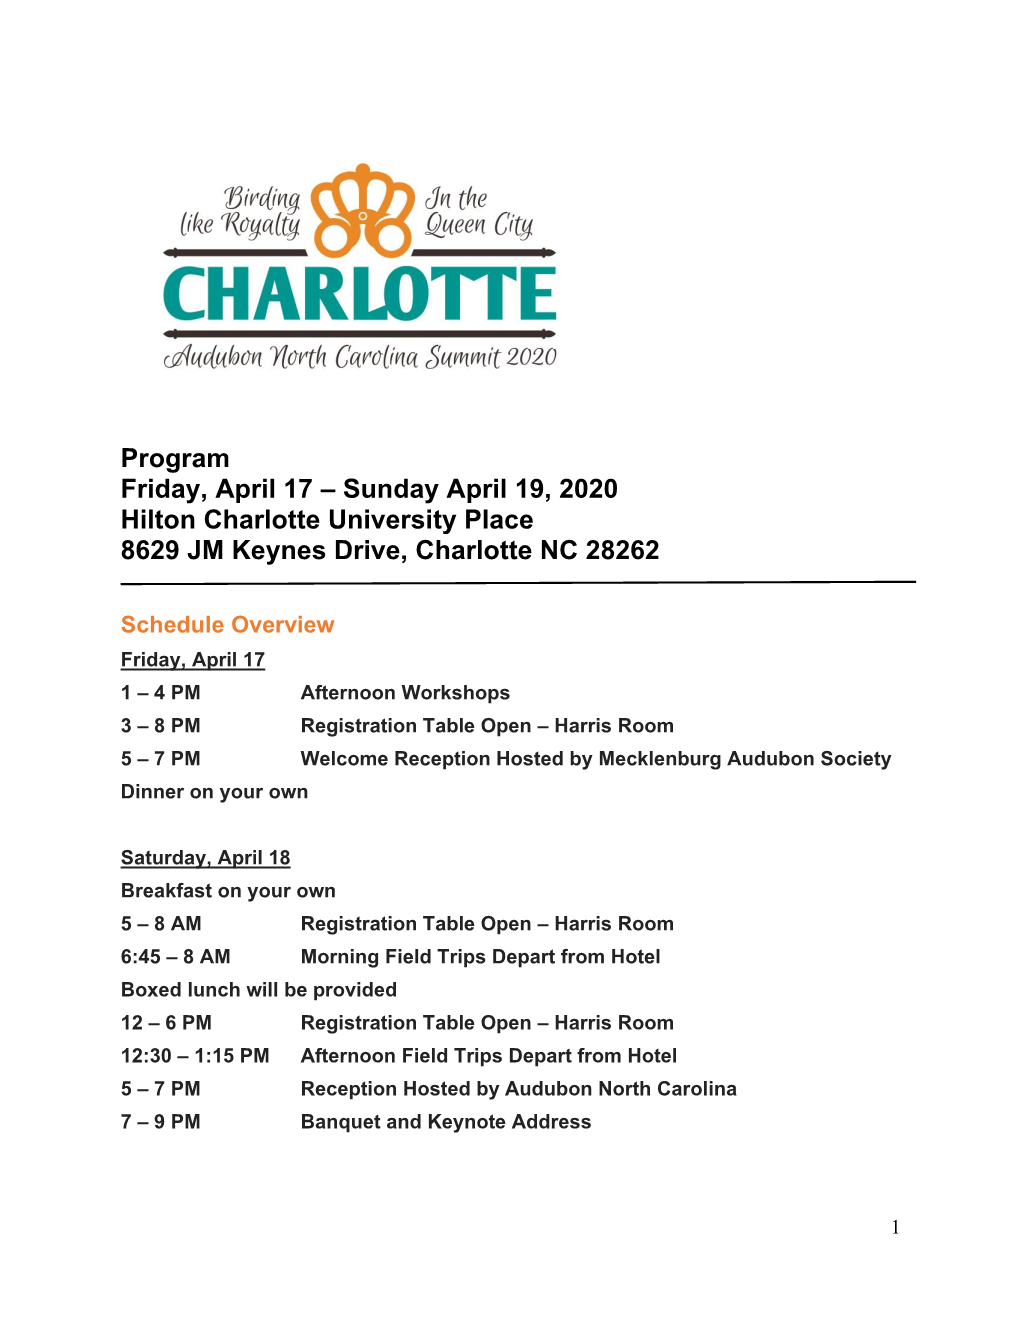 Program Friday, April 17 – Sunday April 19, 2020 Hilton Charlotte University Place 8629 JM Keynes Drive, Charlotte NC 28262